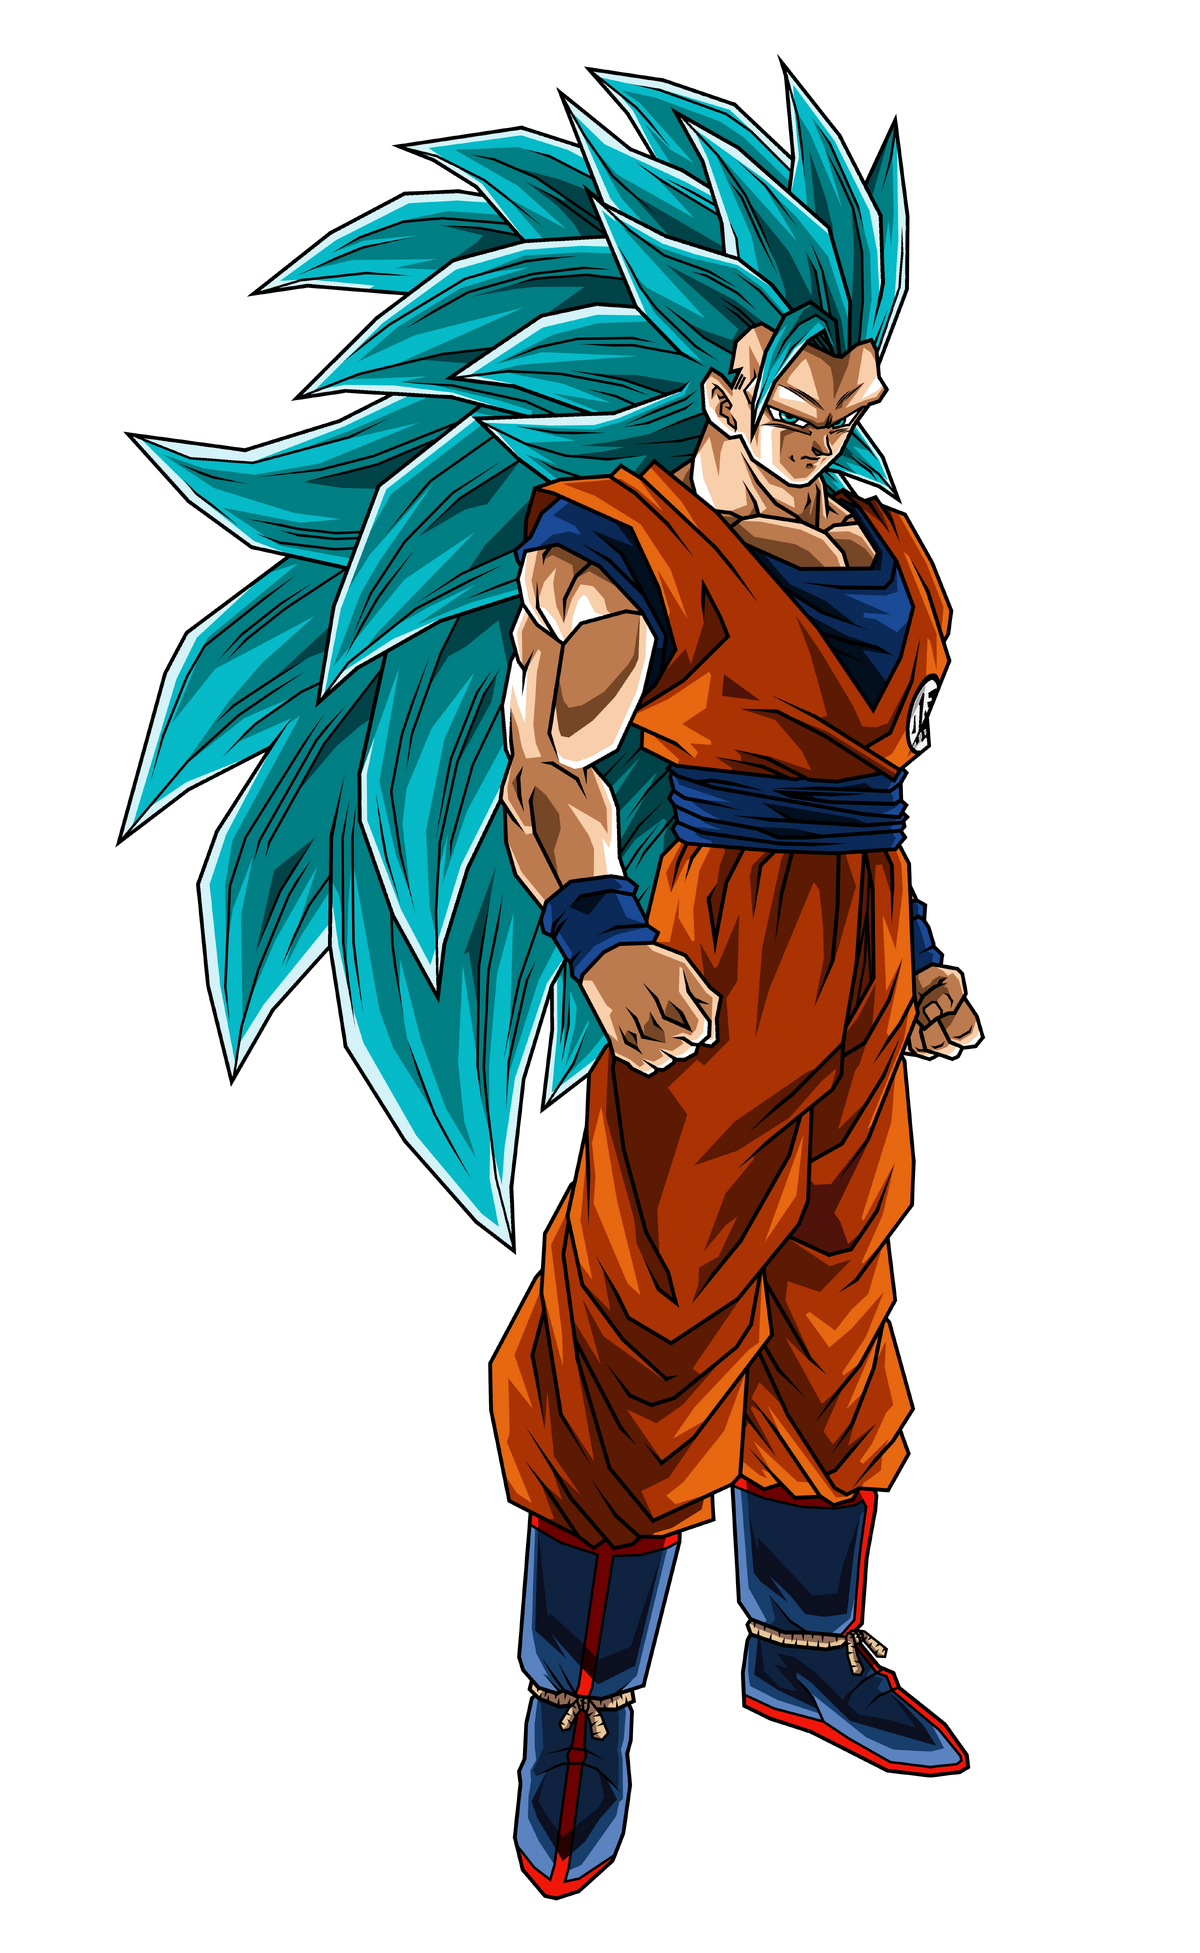 Super Saiyan Blue 3 Goku is Born! [ What if ] 